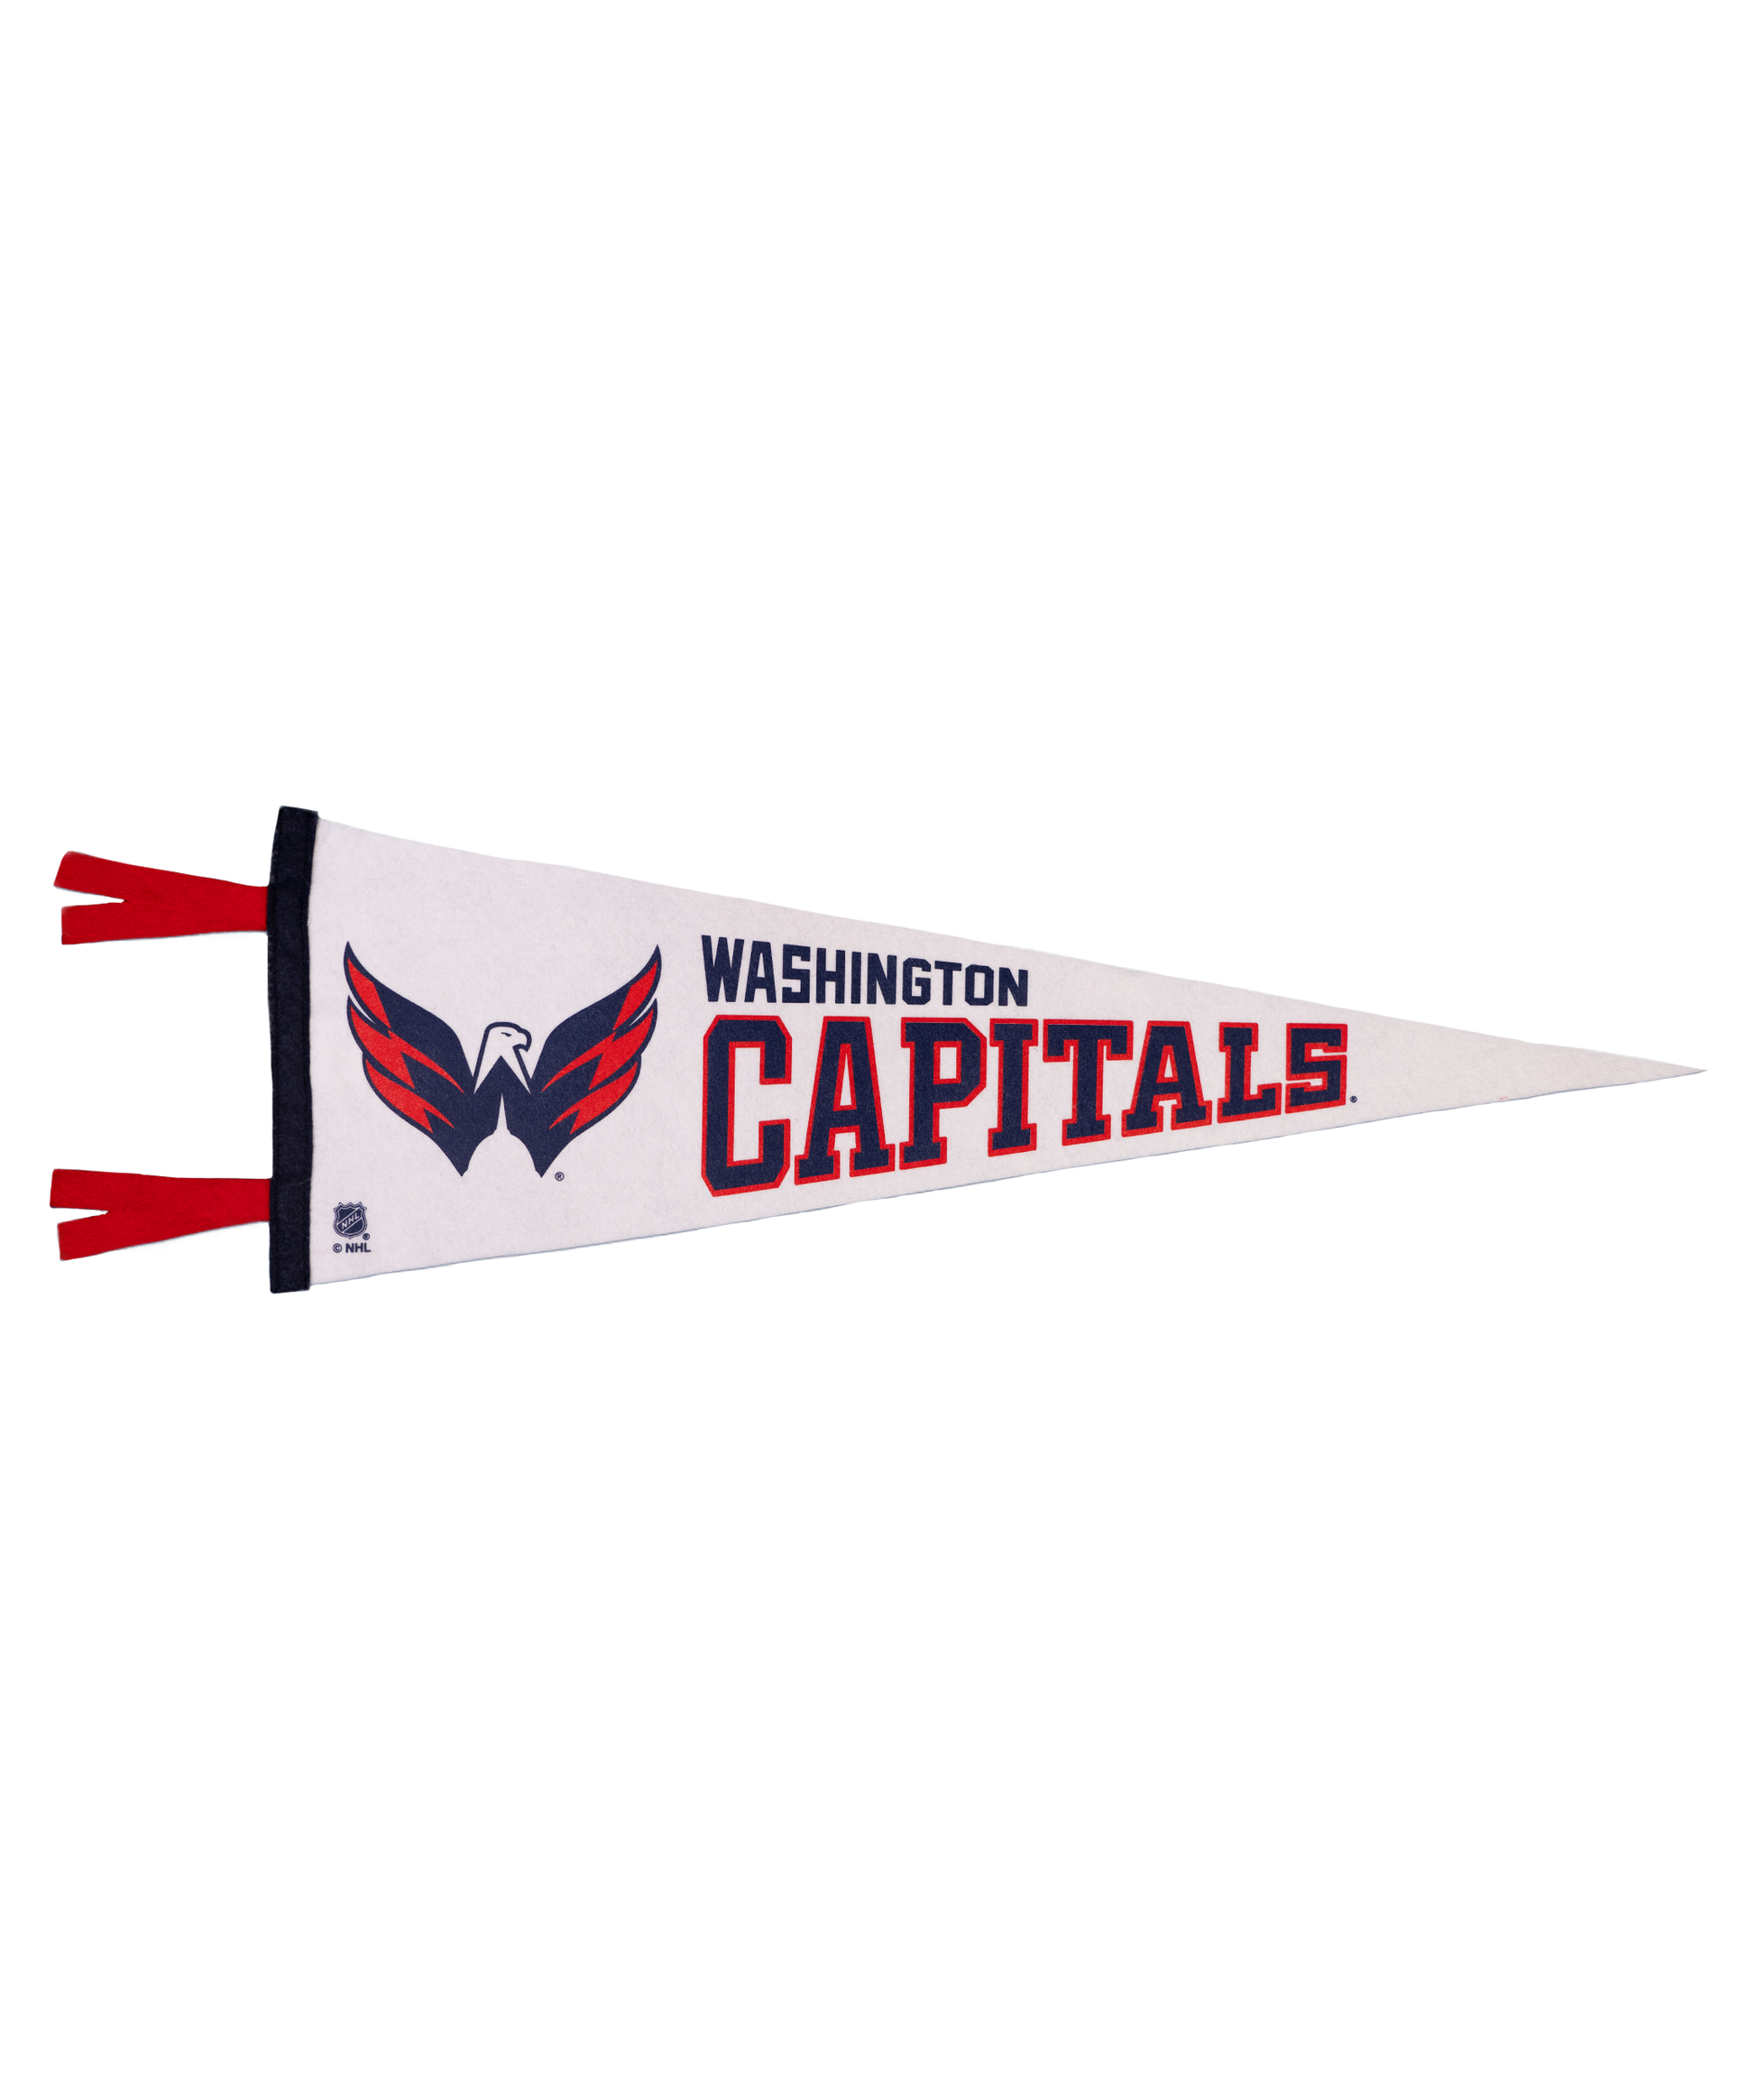 Washington Capitals Pennant | NHL x Oxford Pennant